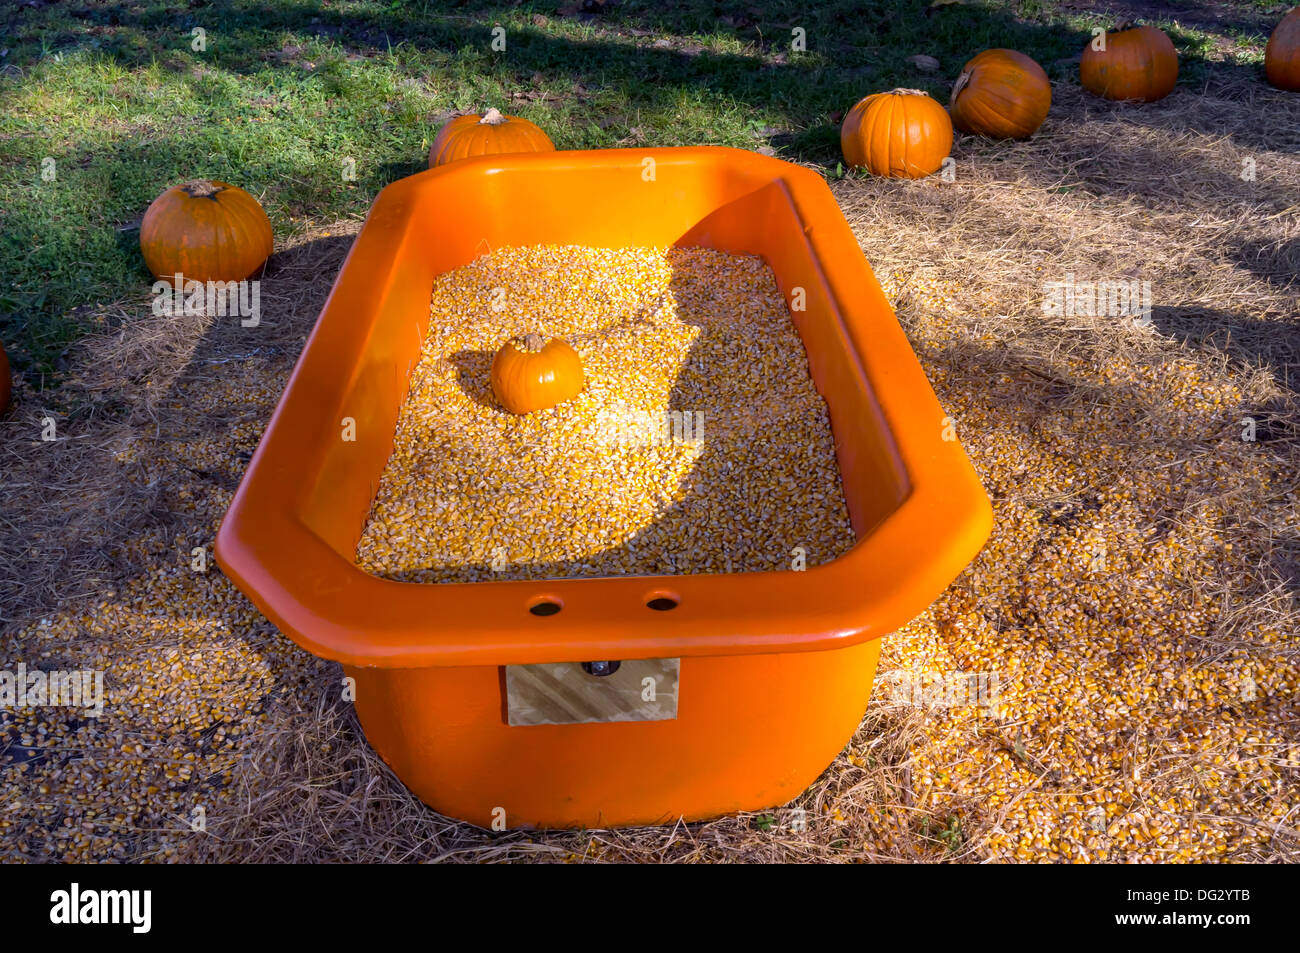 A small Halloween orange pumpkin [Cucurbita pepo] sits in an orange tub of corn. Stock Photo